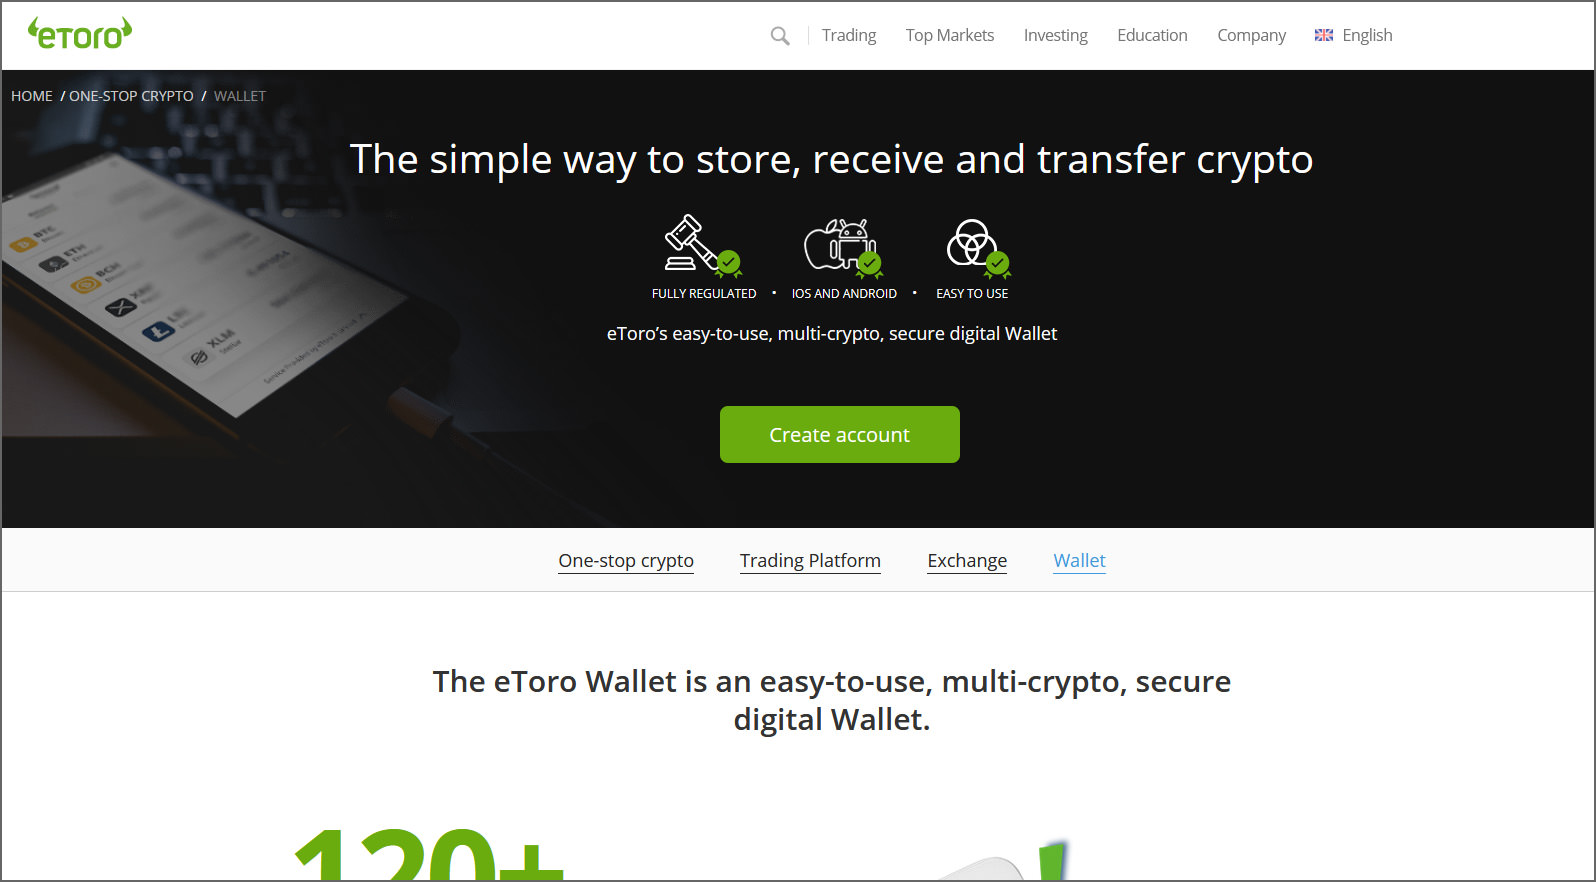 low transaction fee crypto wallet